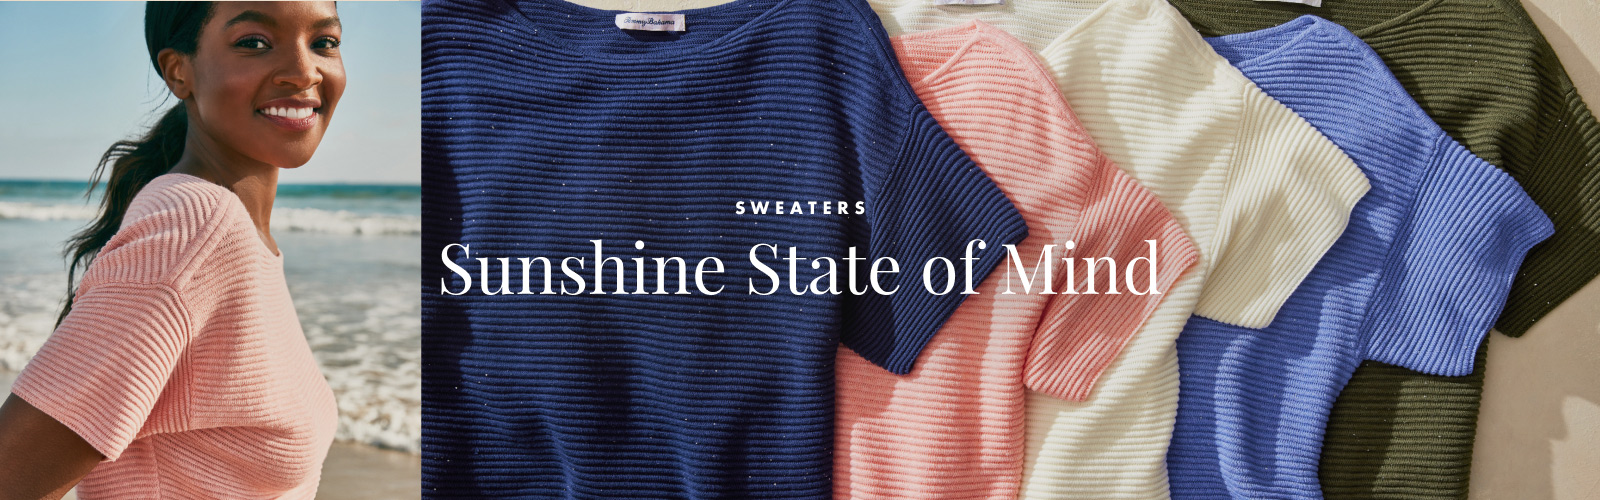 Sweaters: Sunshine State of Mind